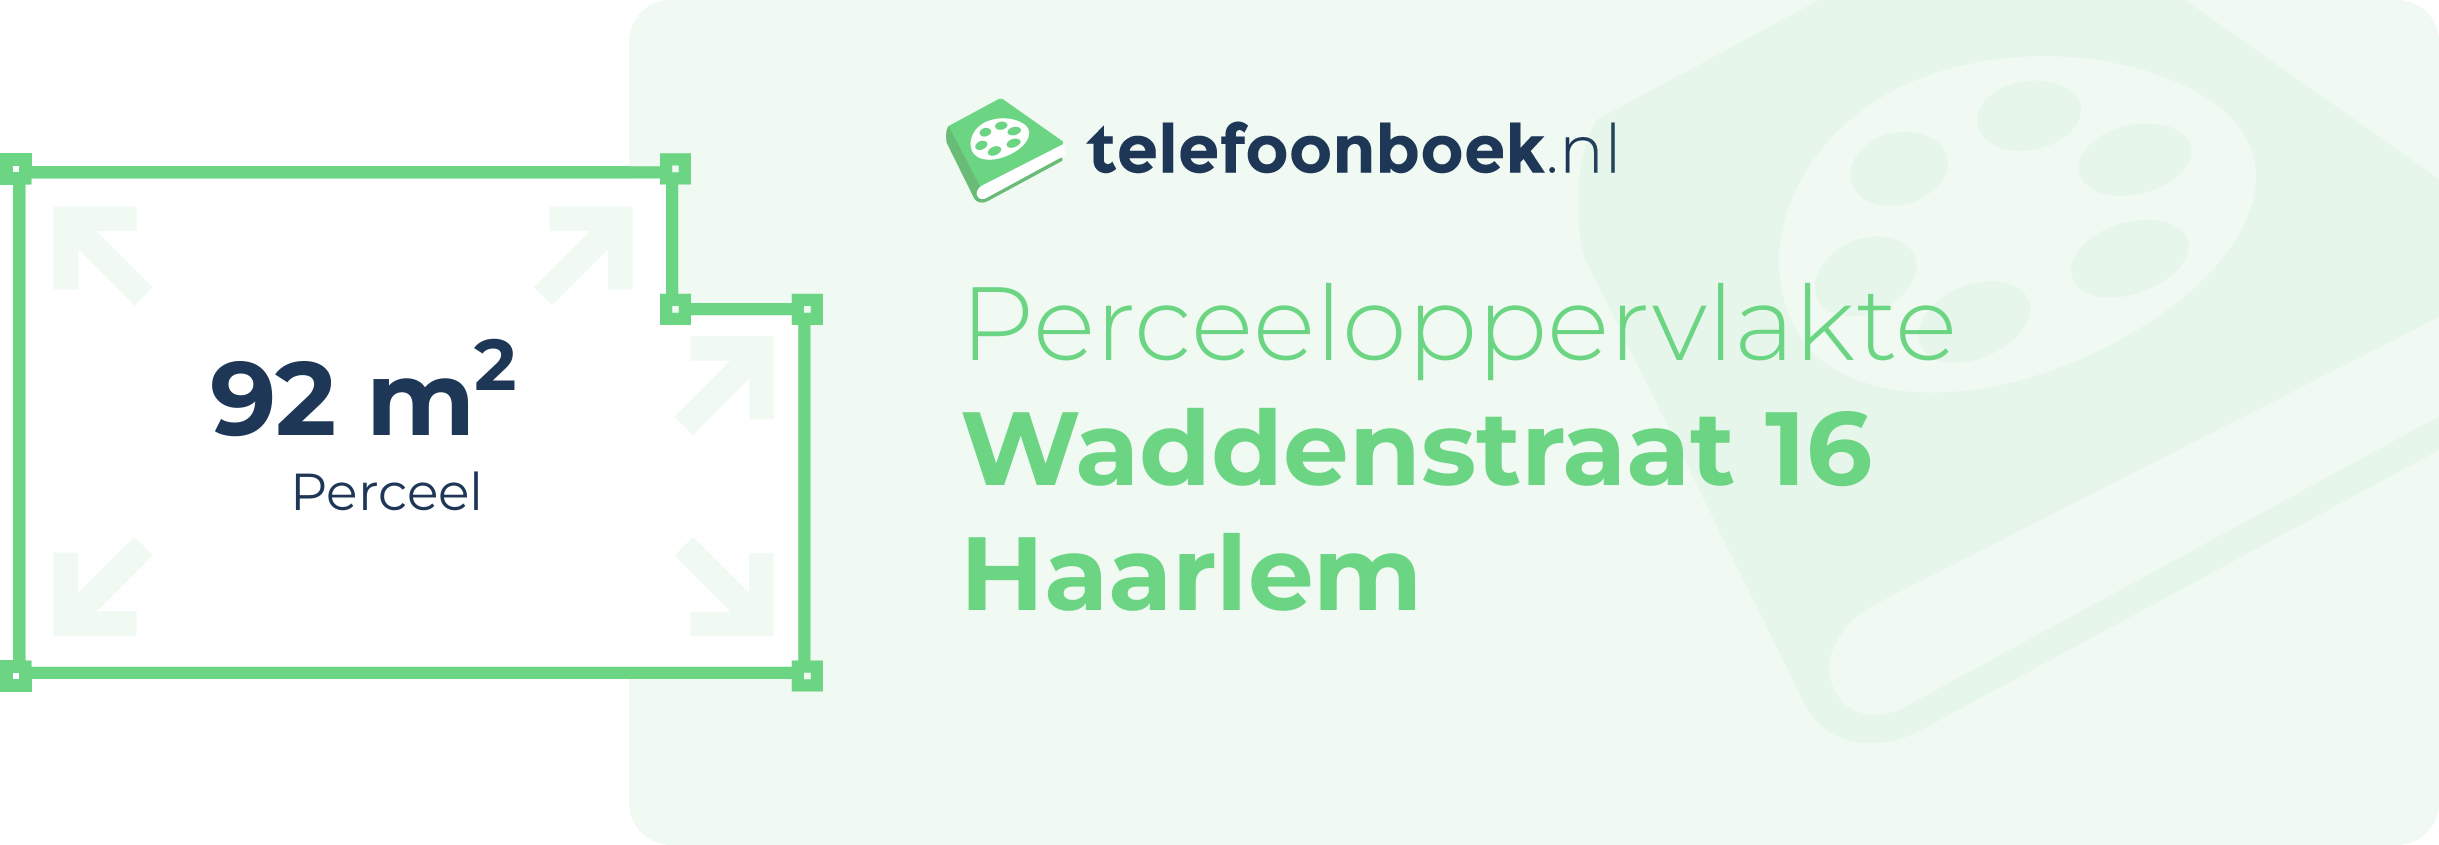 Perceeloppervlakte Waddenstraat 16 Haarlem